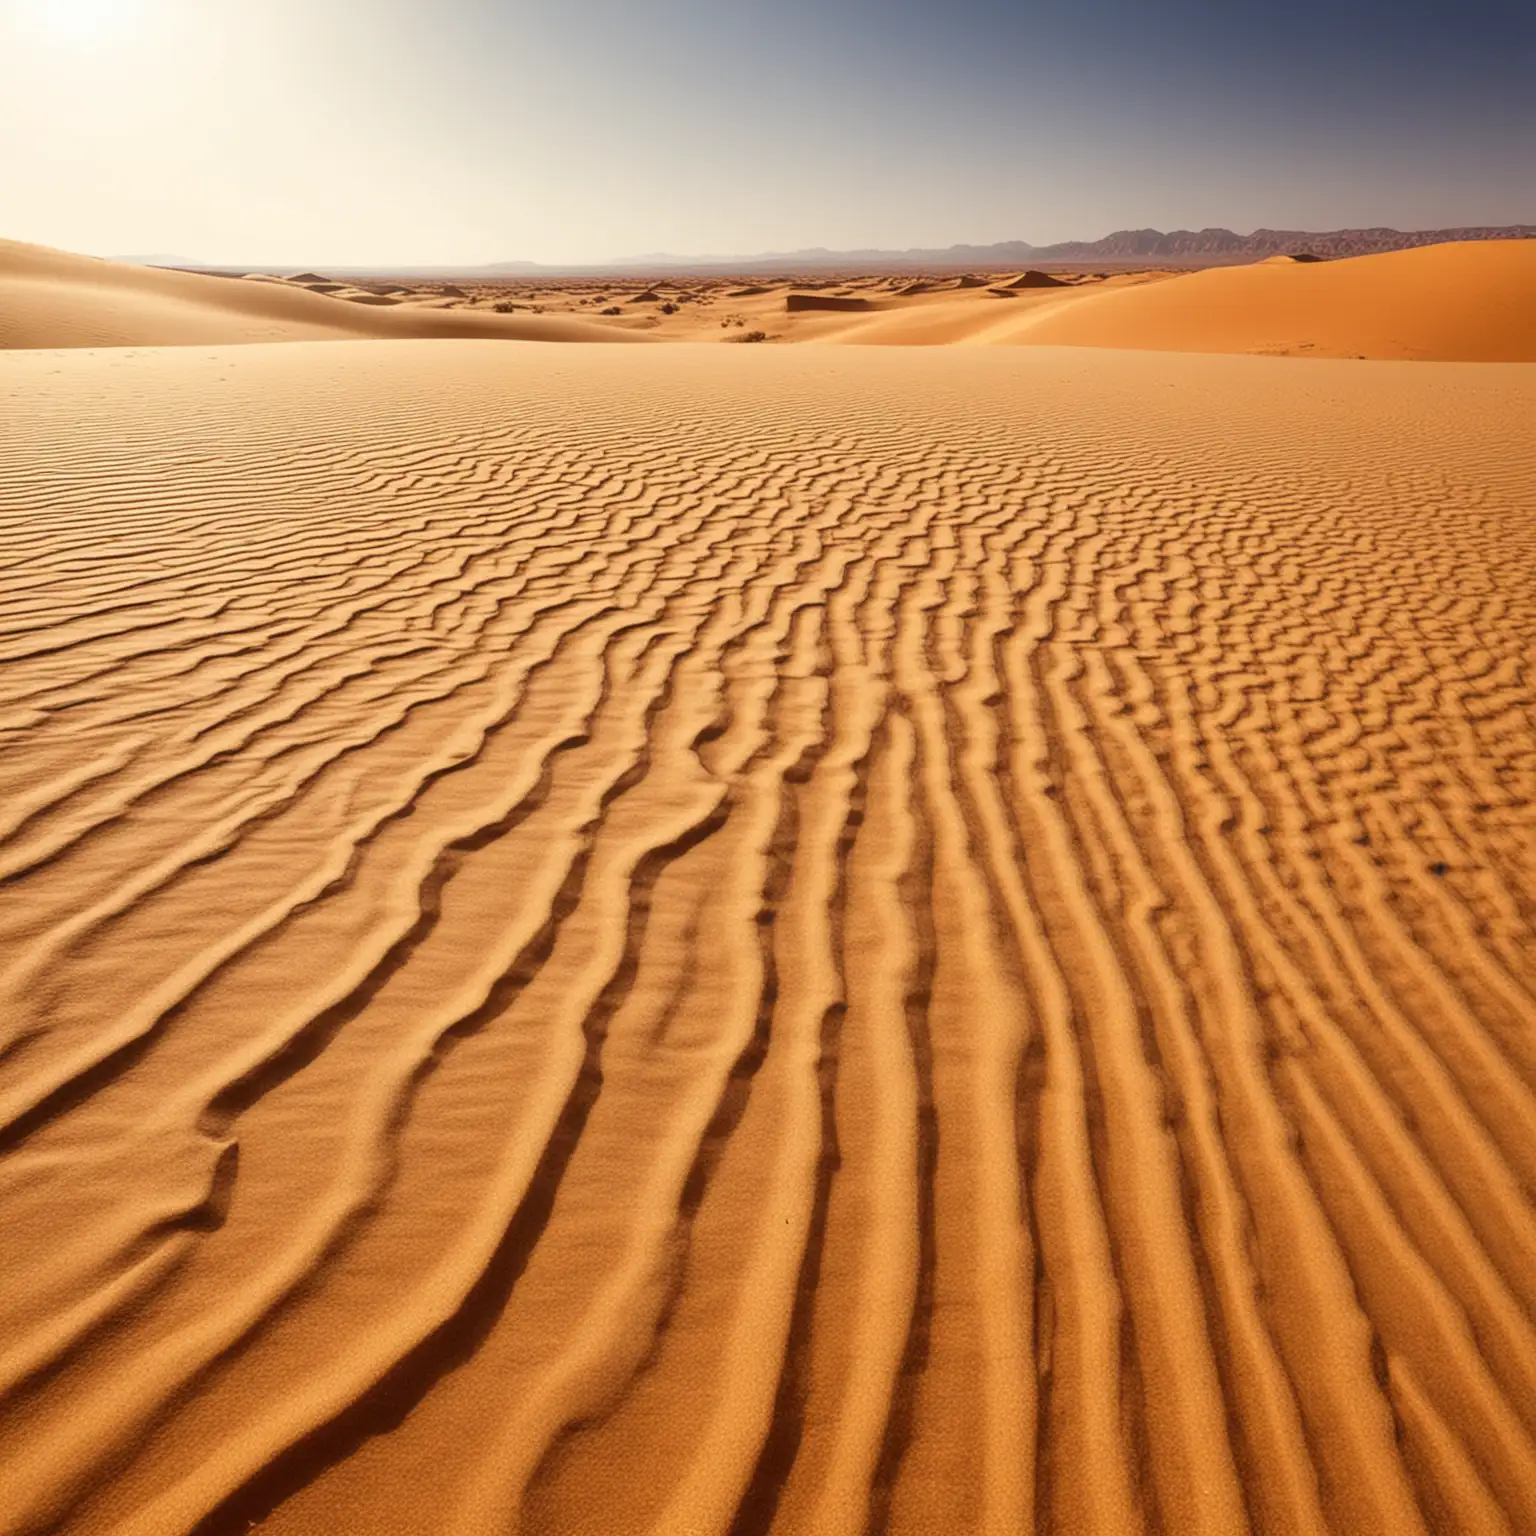 a very hot sandy desert landscape like sahara
